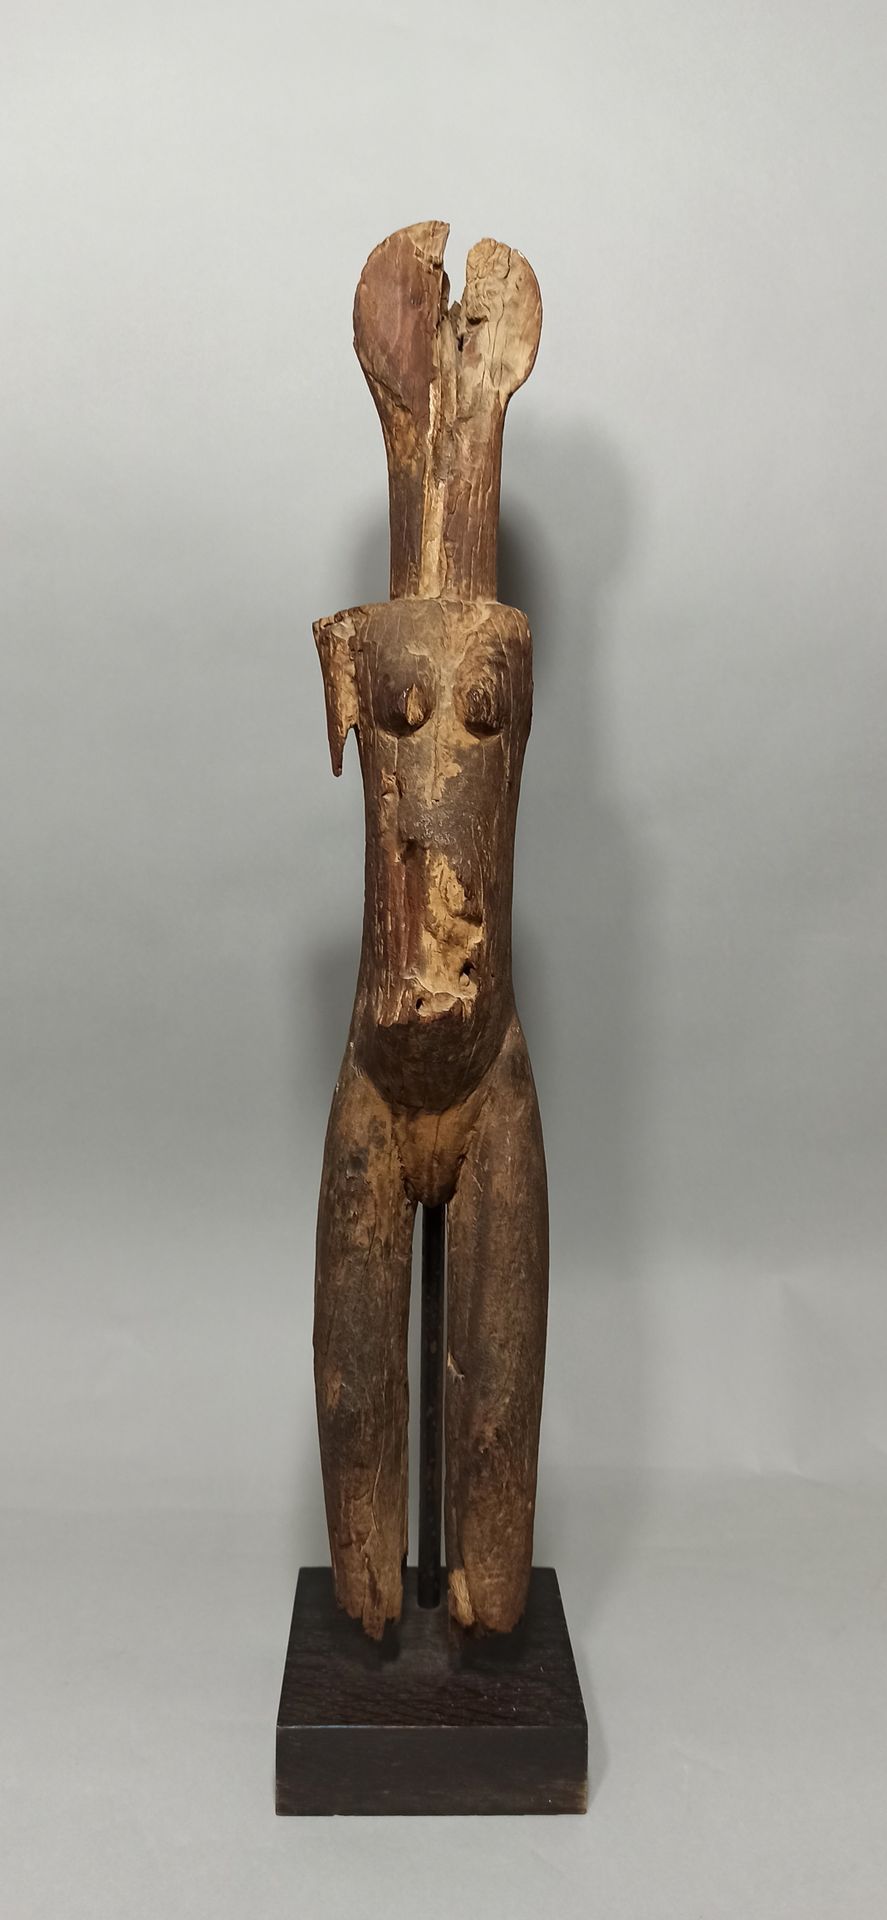 Null 木雕的女性雕像，代表一个站立的人物。

脸部非常受损

高度：66厘米